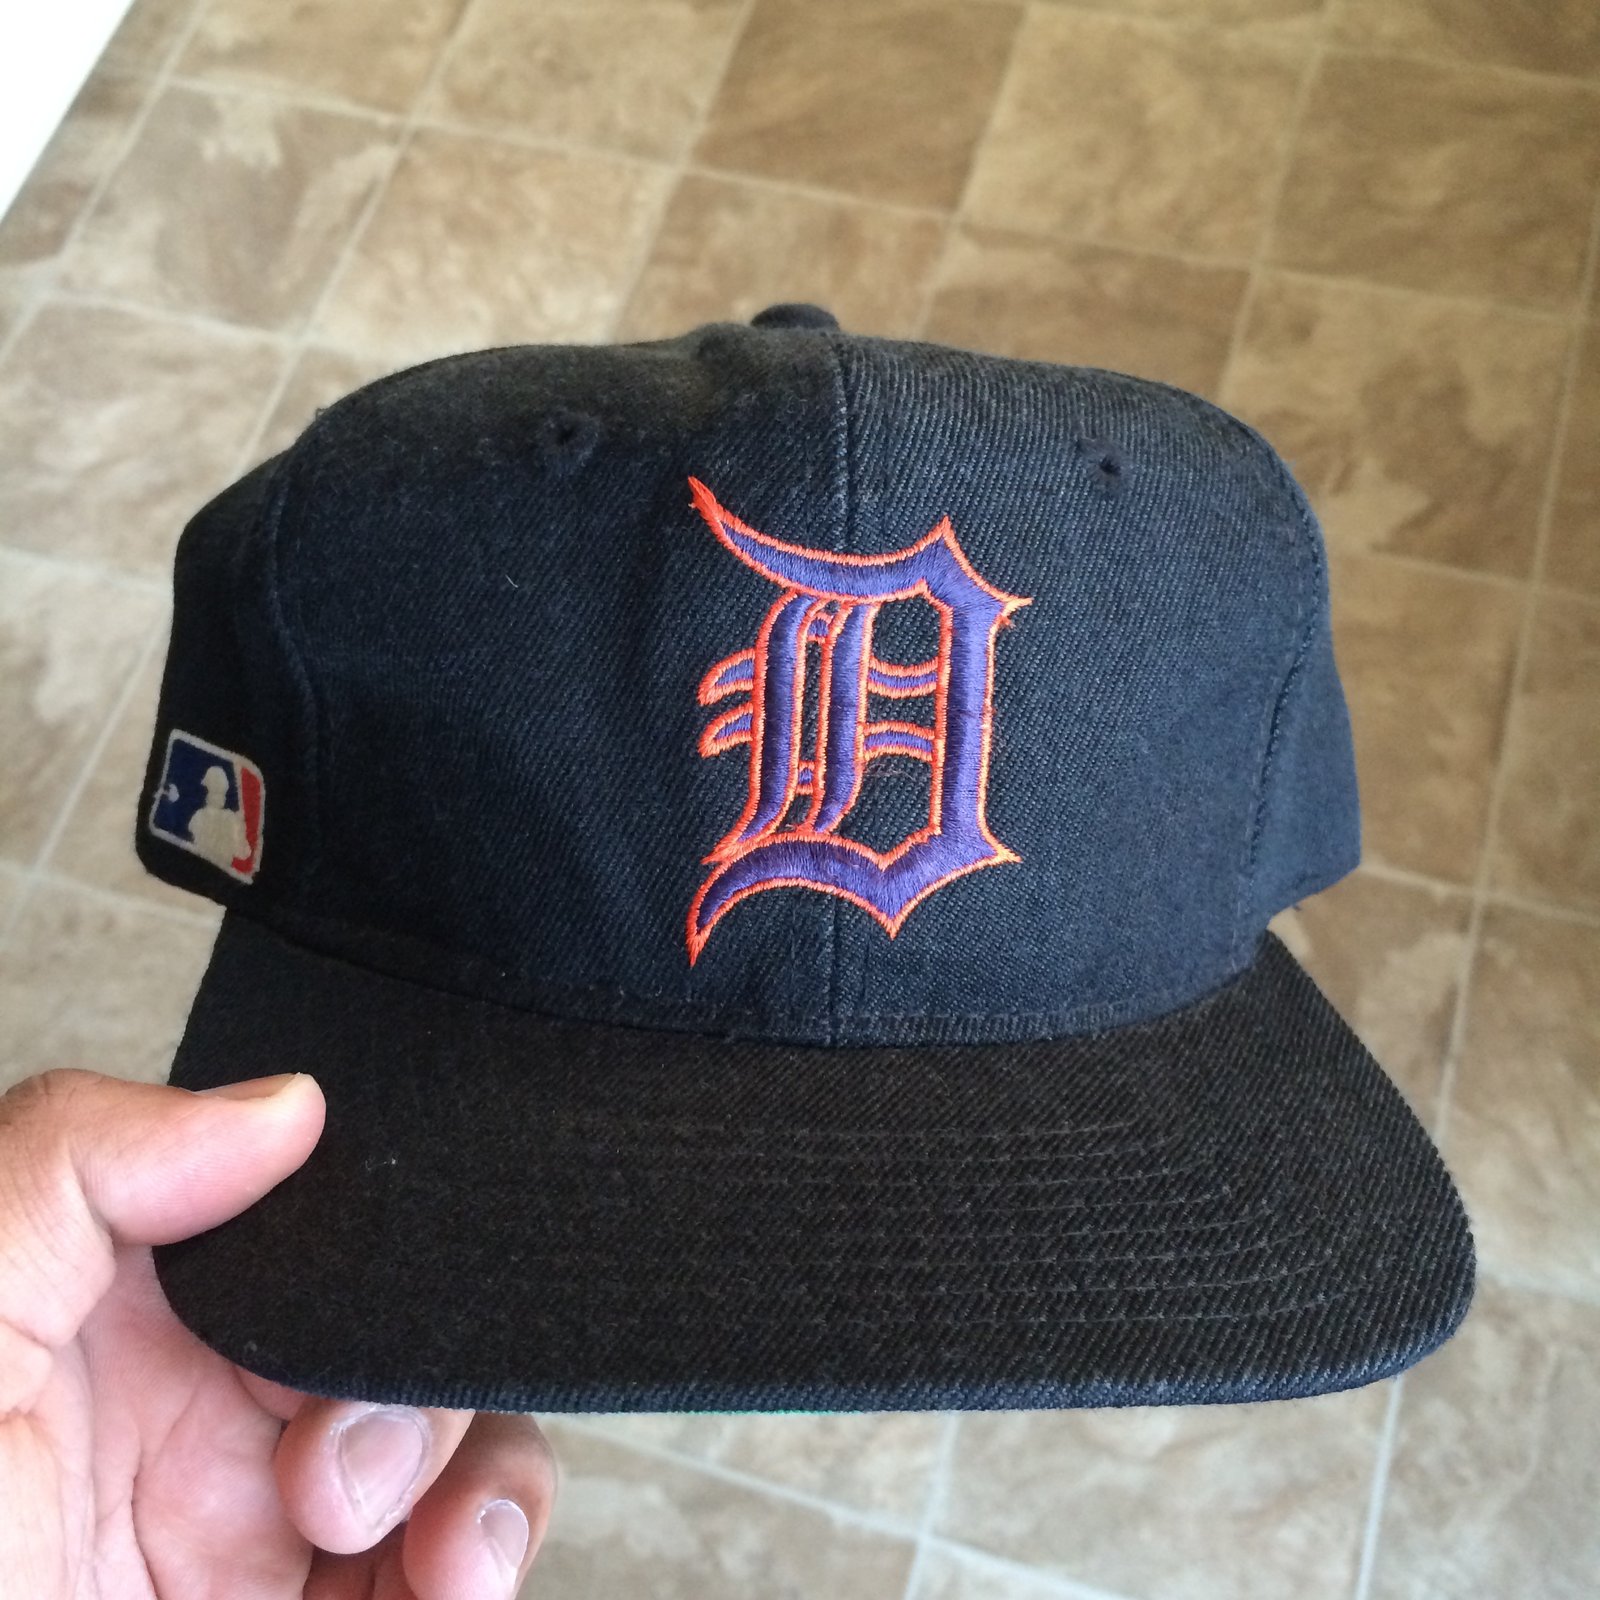 Vintage Detroit Tigers Snapback Hat MLB Sports Specialties